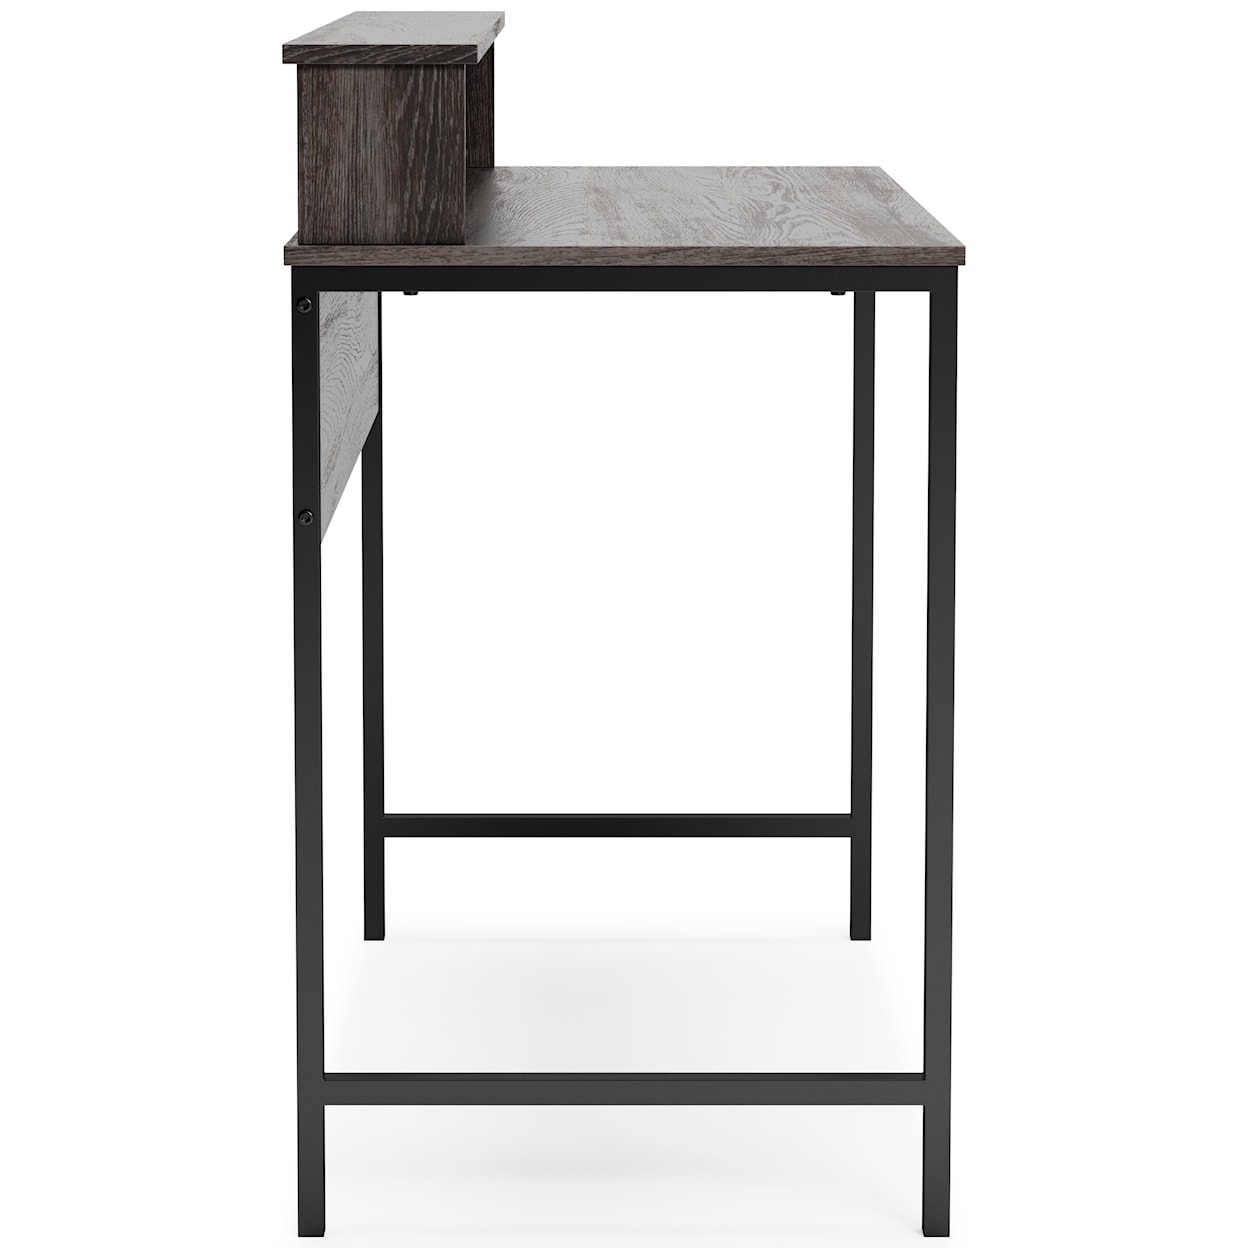 Ashley Furniture Signature Design Freedan Desk